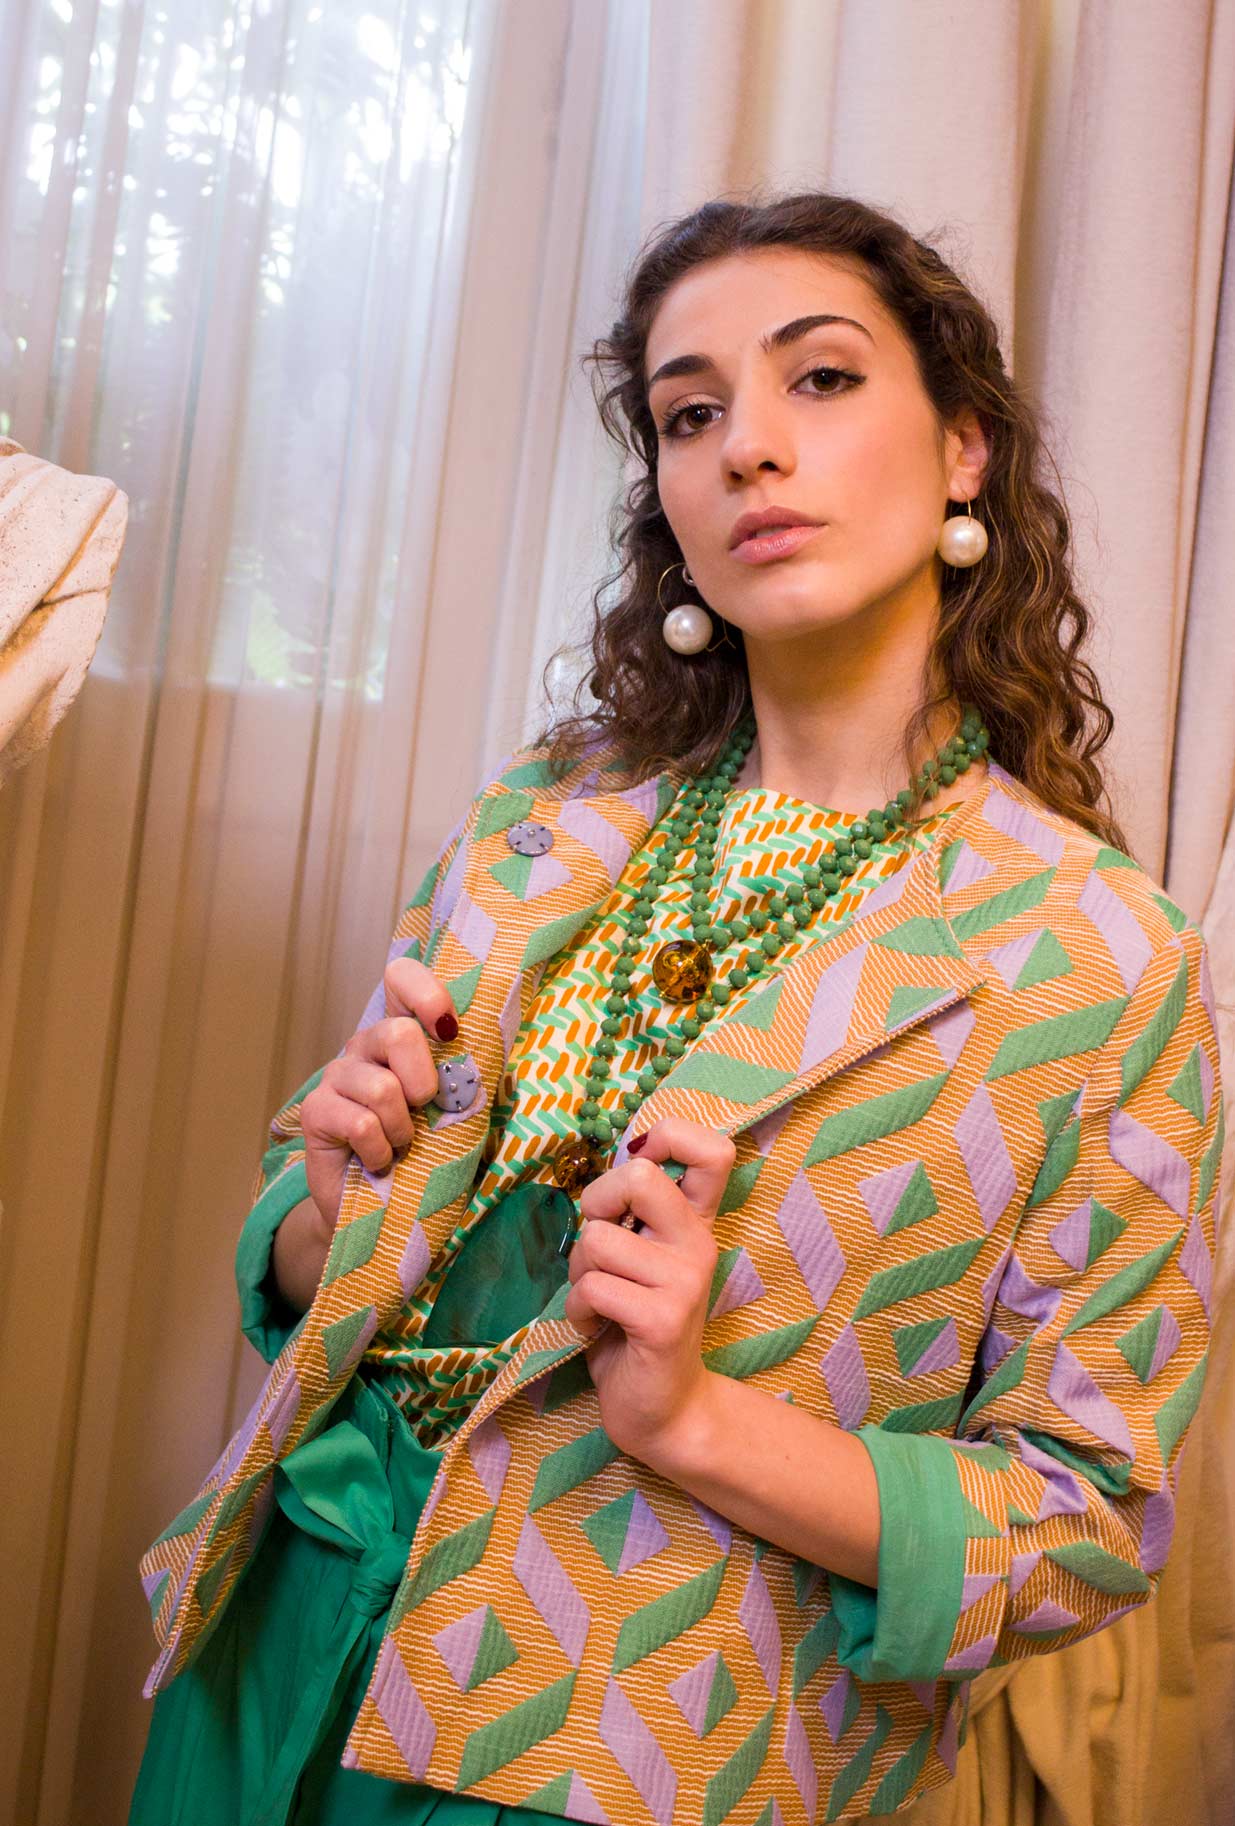 Niu Fashion Donna Giacca Bolero Weaving Maracuja